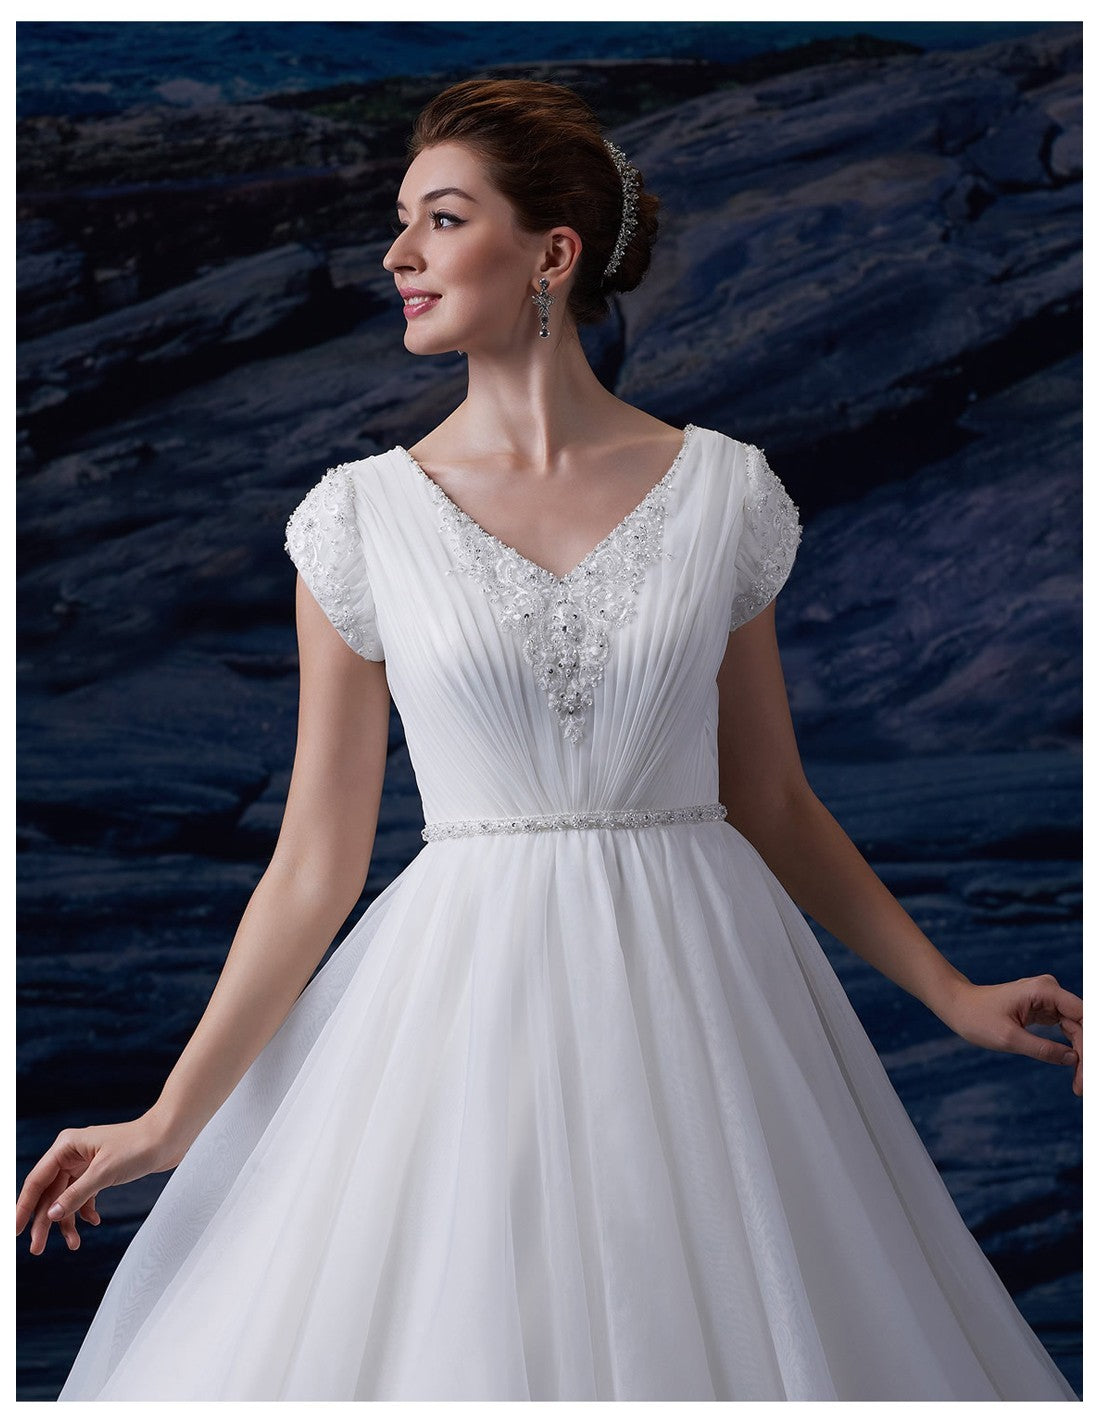 Venus Bridal TB7677 White Modest Wedding Dress closeup from A Closet Full of Dresses